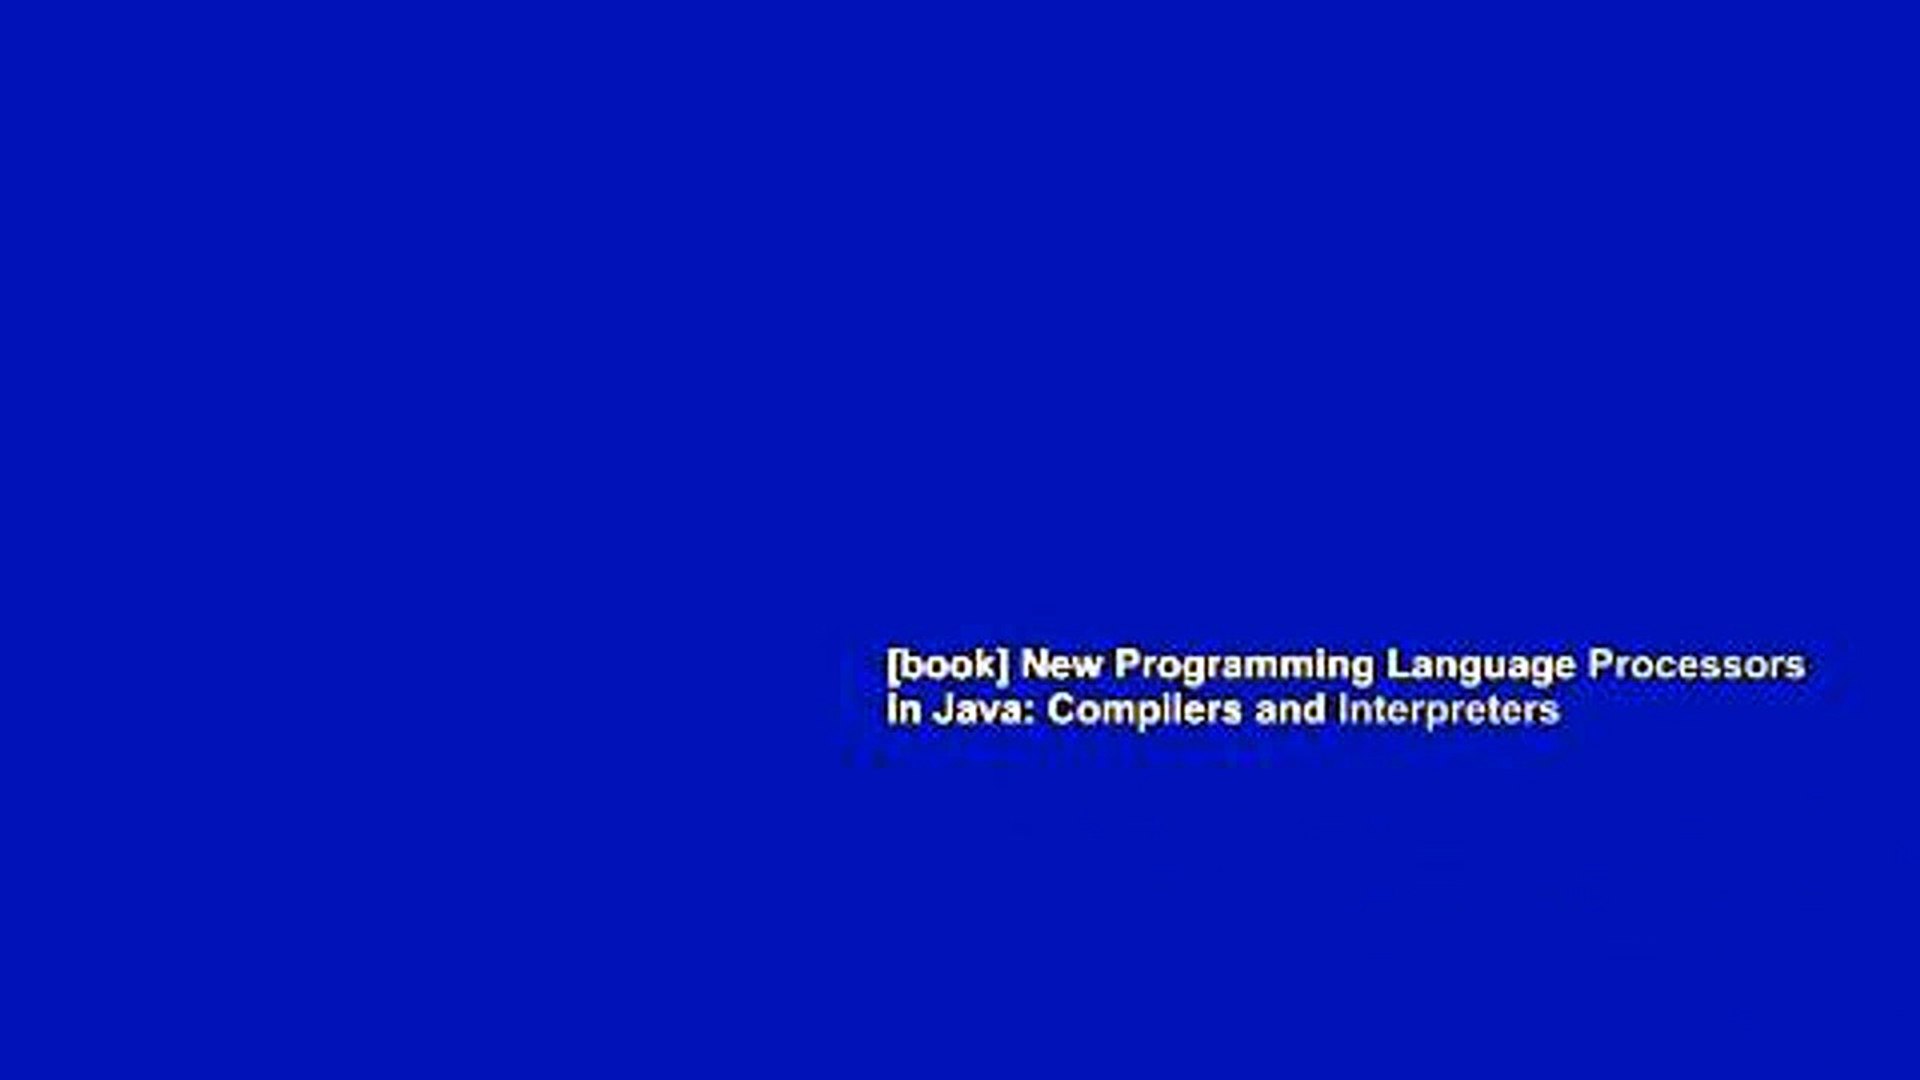 [book] New Programming Language Processors in Java: Compilers and Interpreters